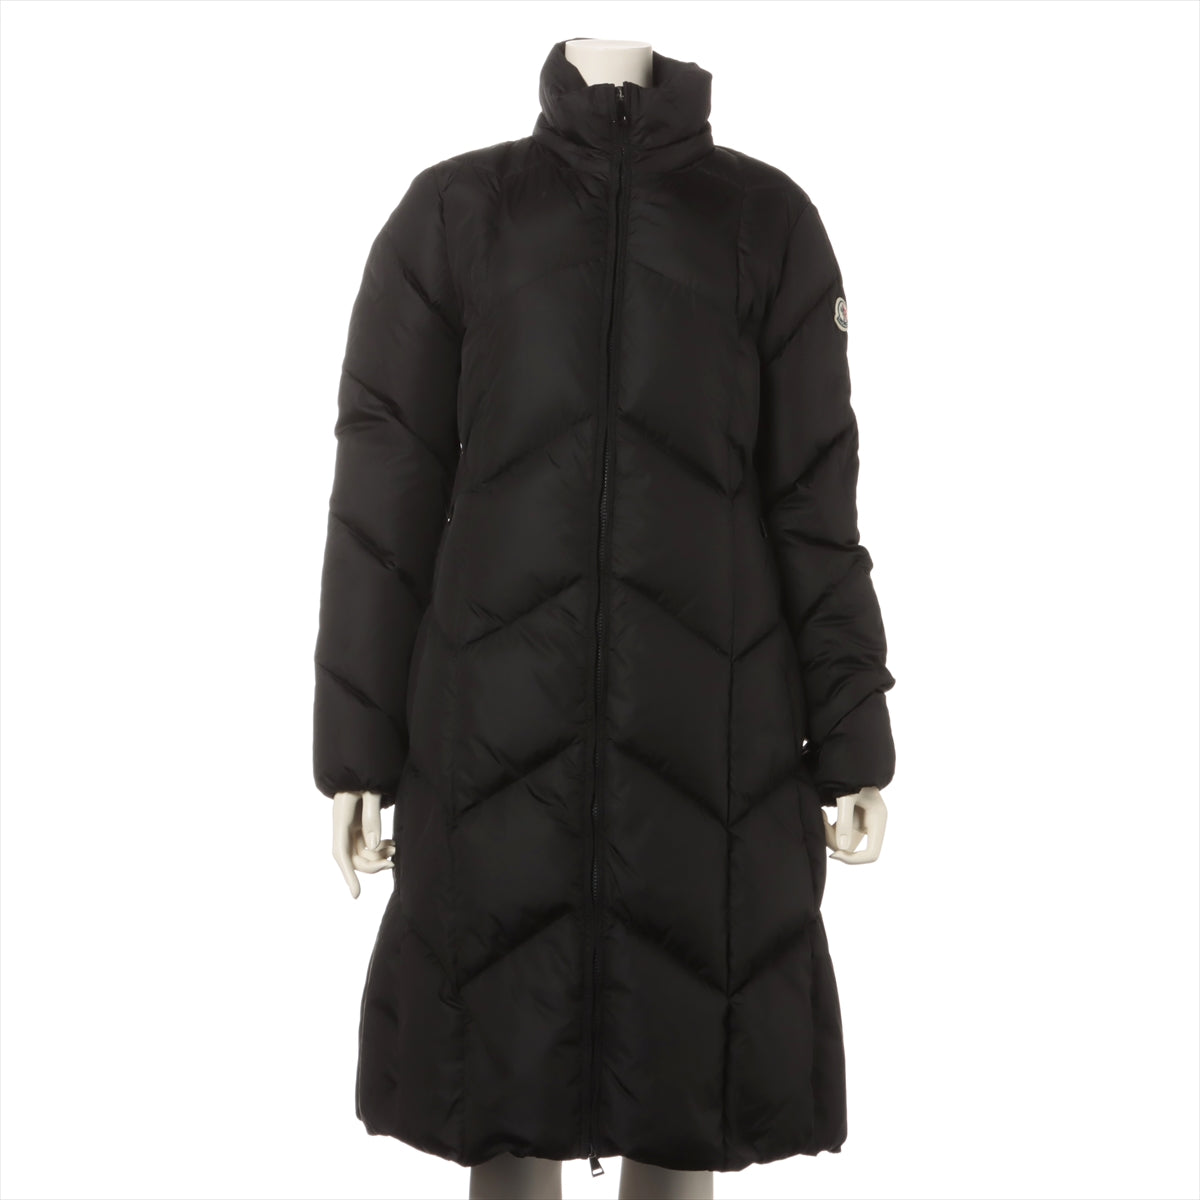 Moncler DUBERRAN 20 years Nylon Down coat 2 Ladies' Black Missing belt Missing hood